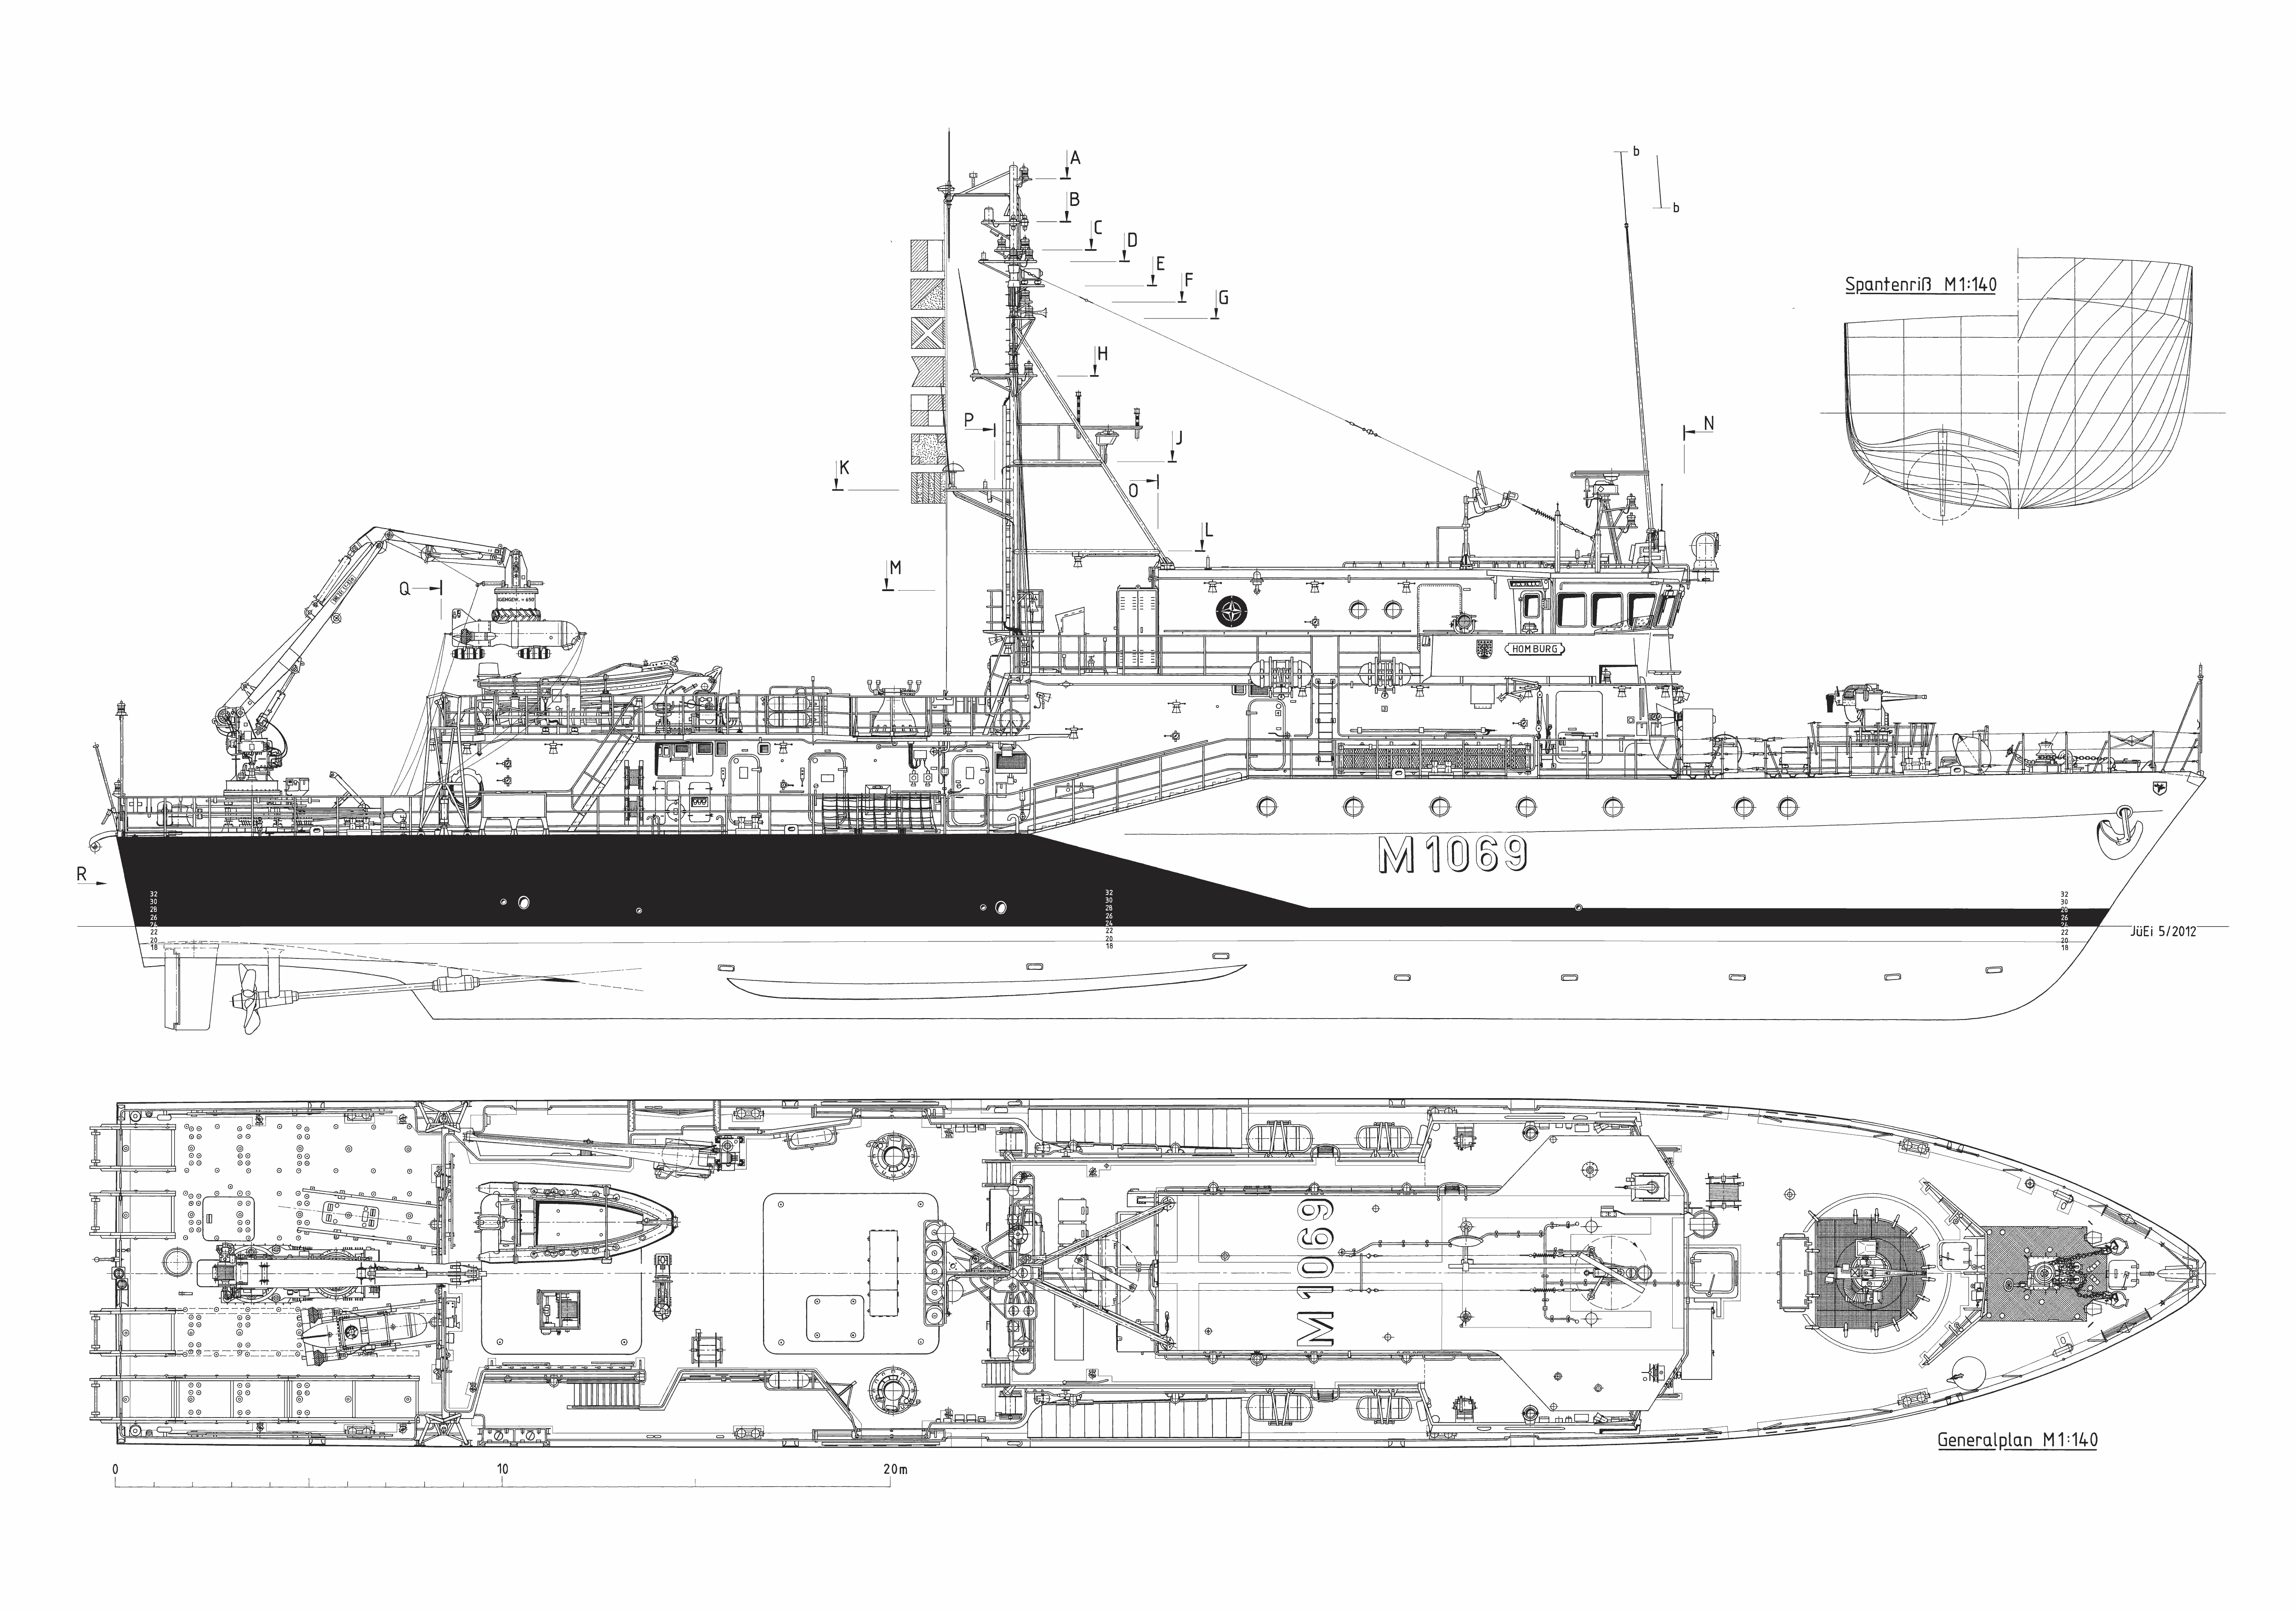 Frankenthal-class minehunter Homburg M1069 blueprint